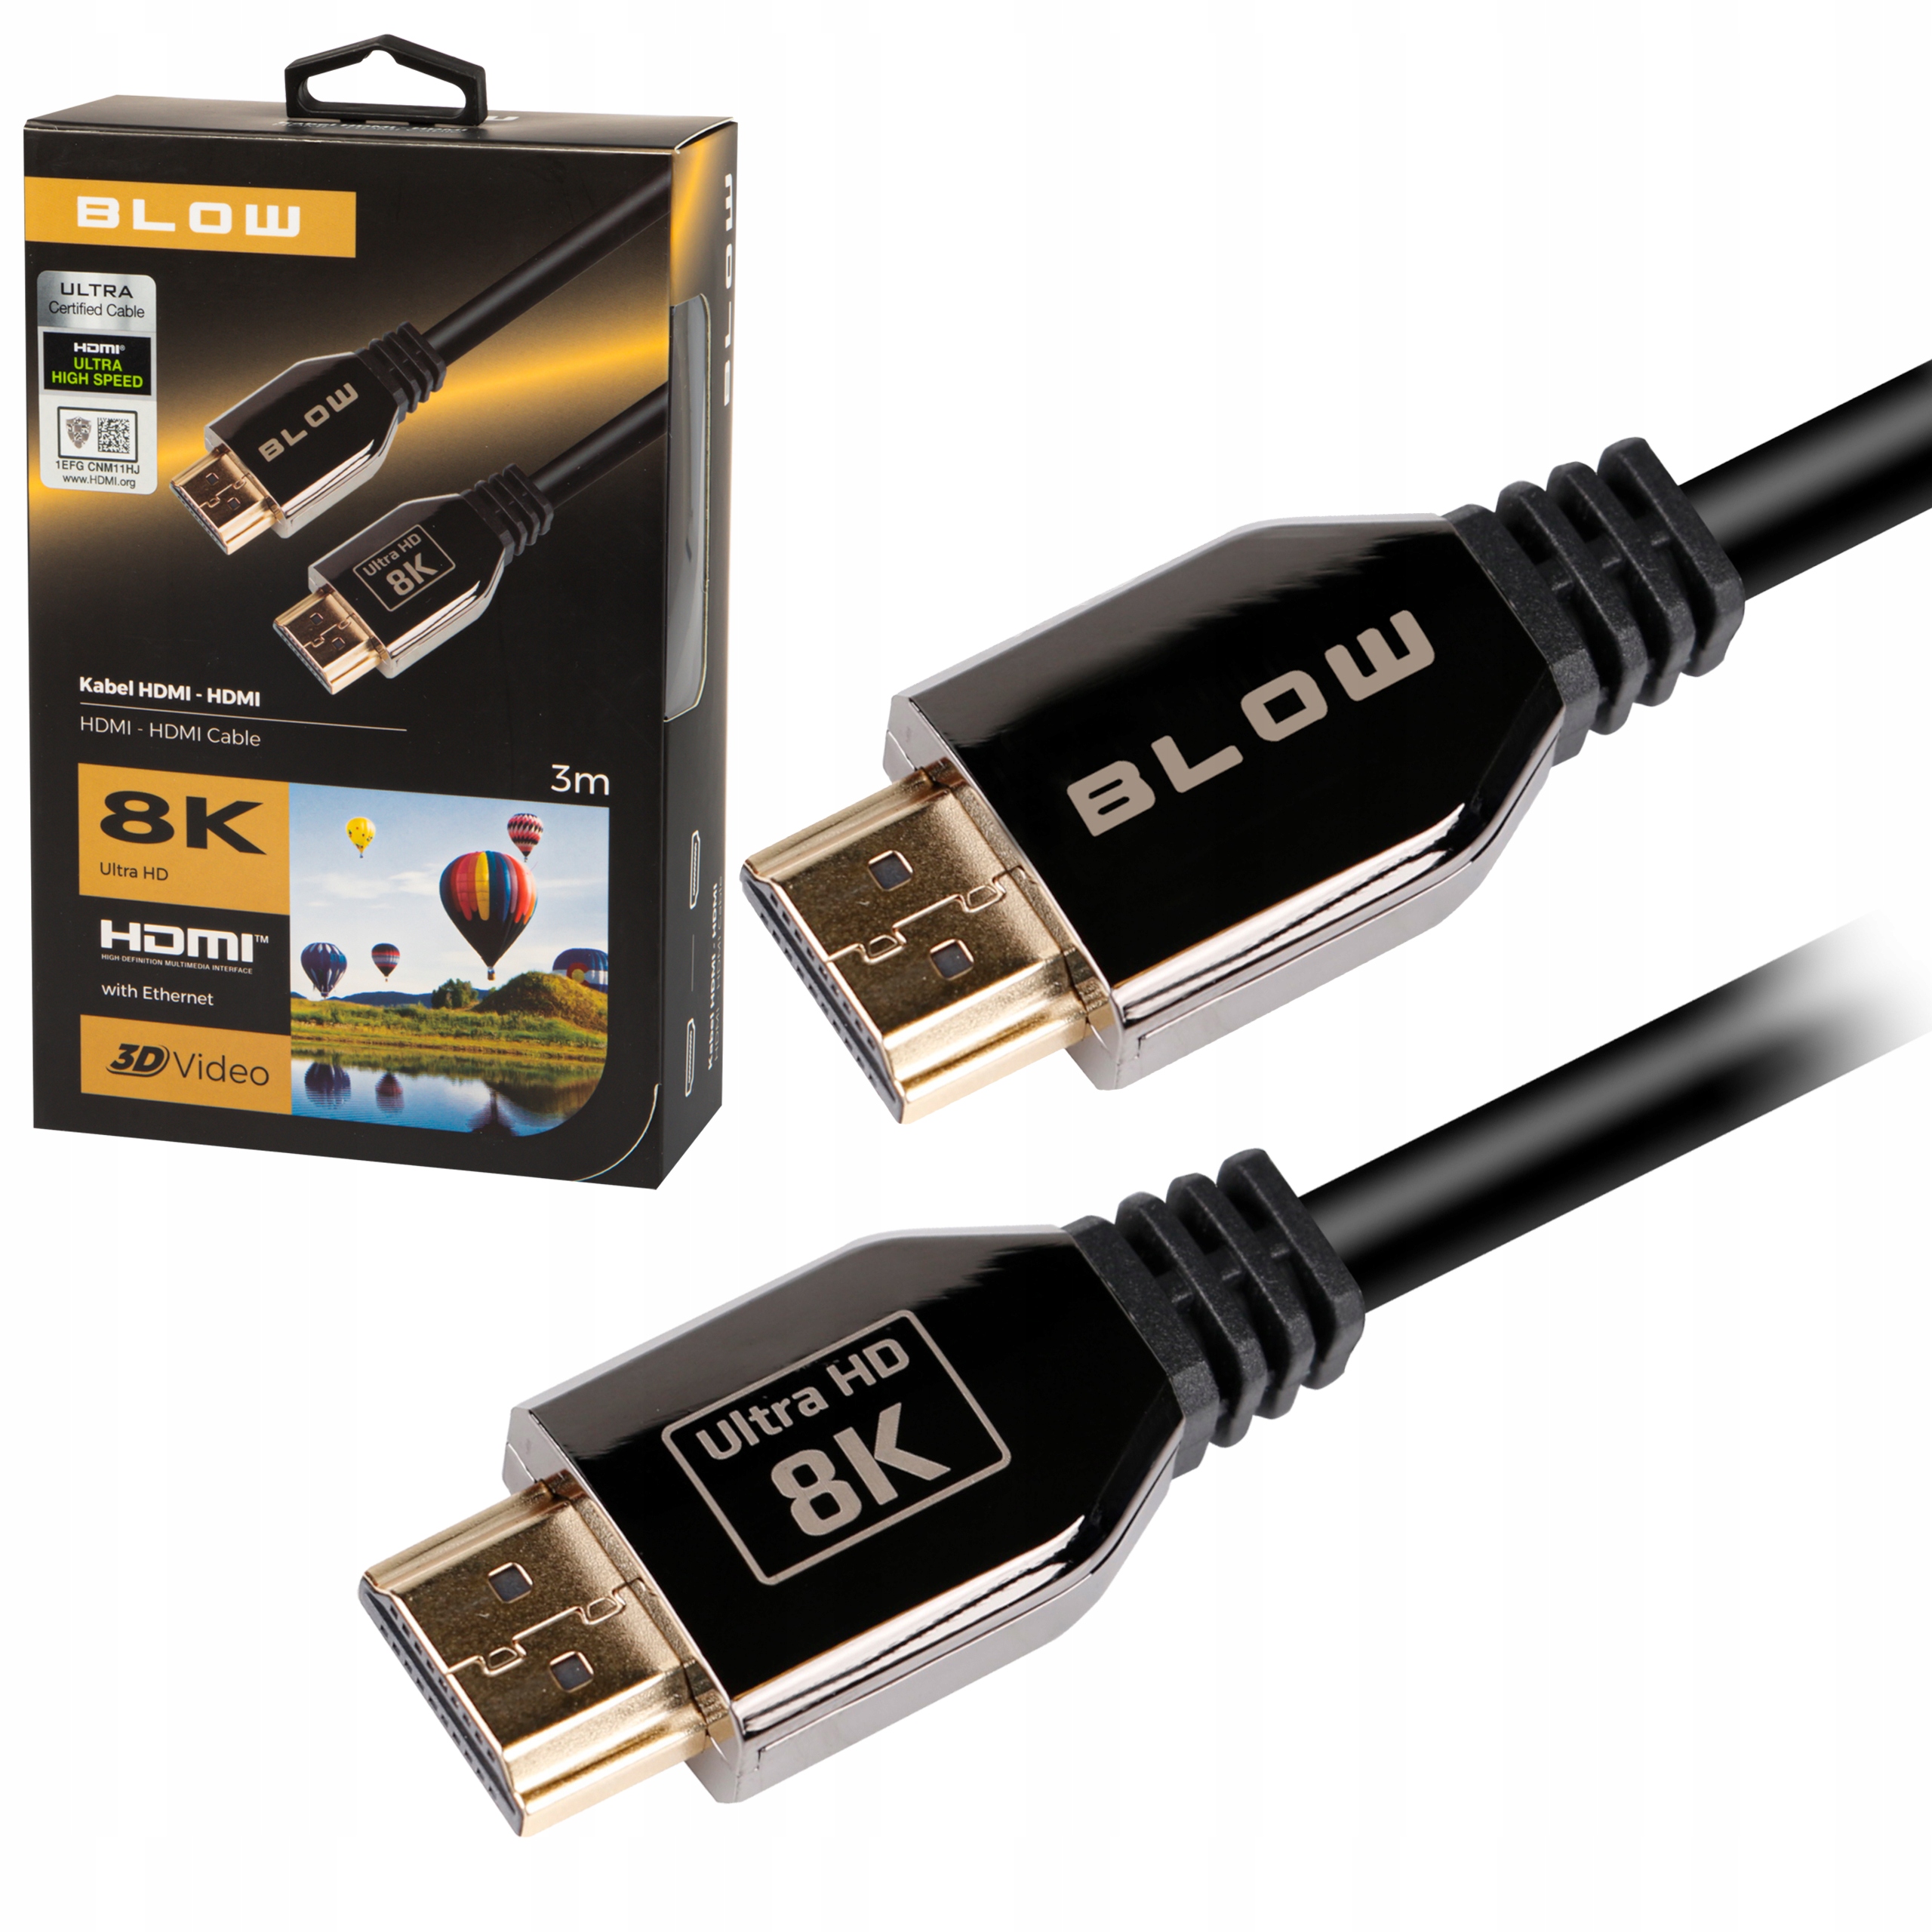 CABLE HDMI 3M 4K V2.0 BASEUS CAKGQ-C01, cable hdmi 3m 4k 